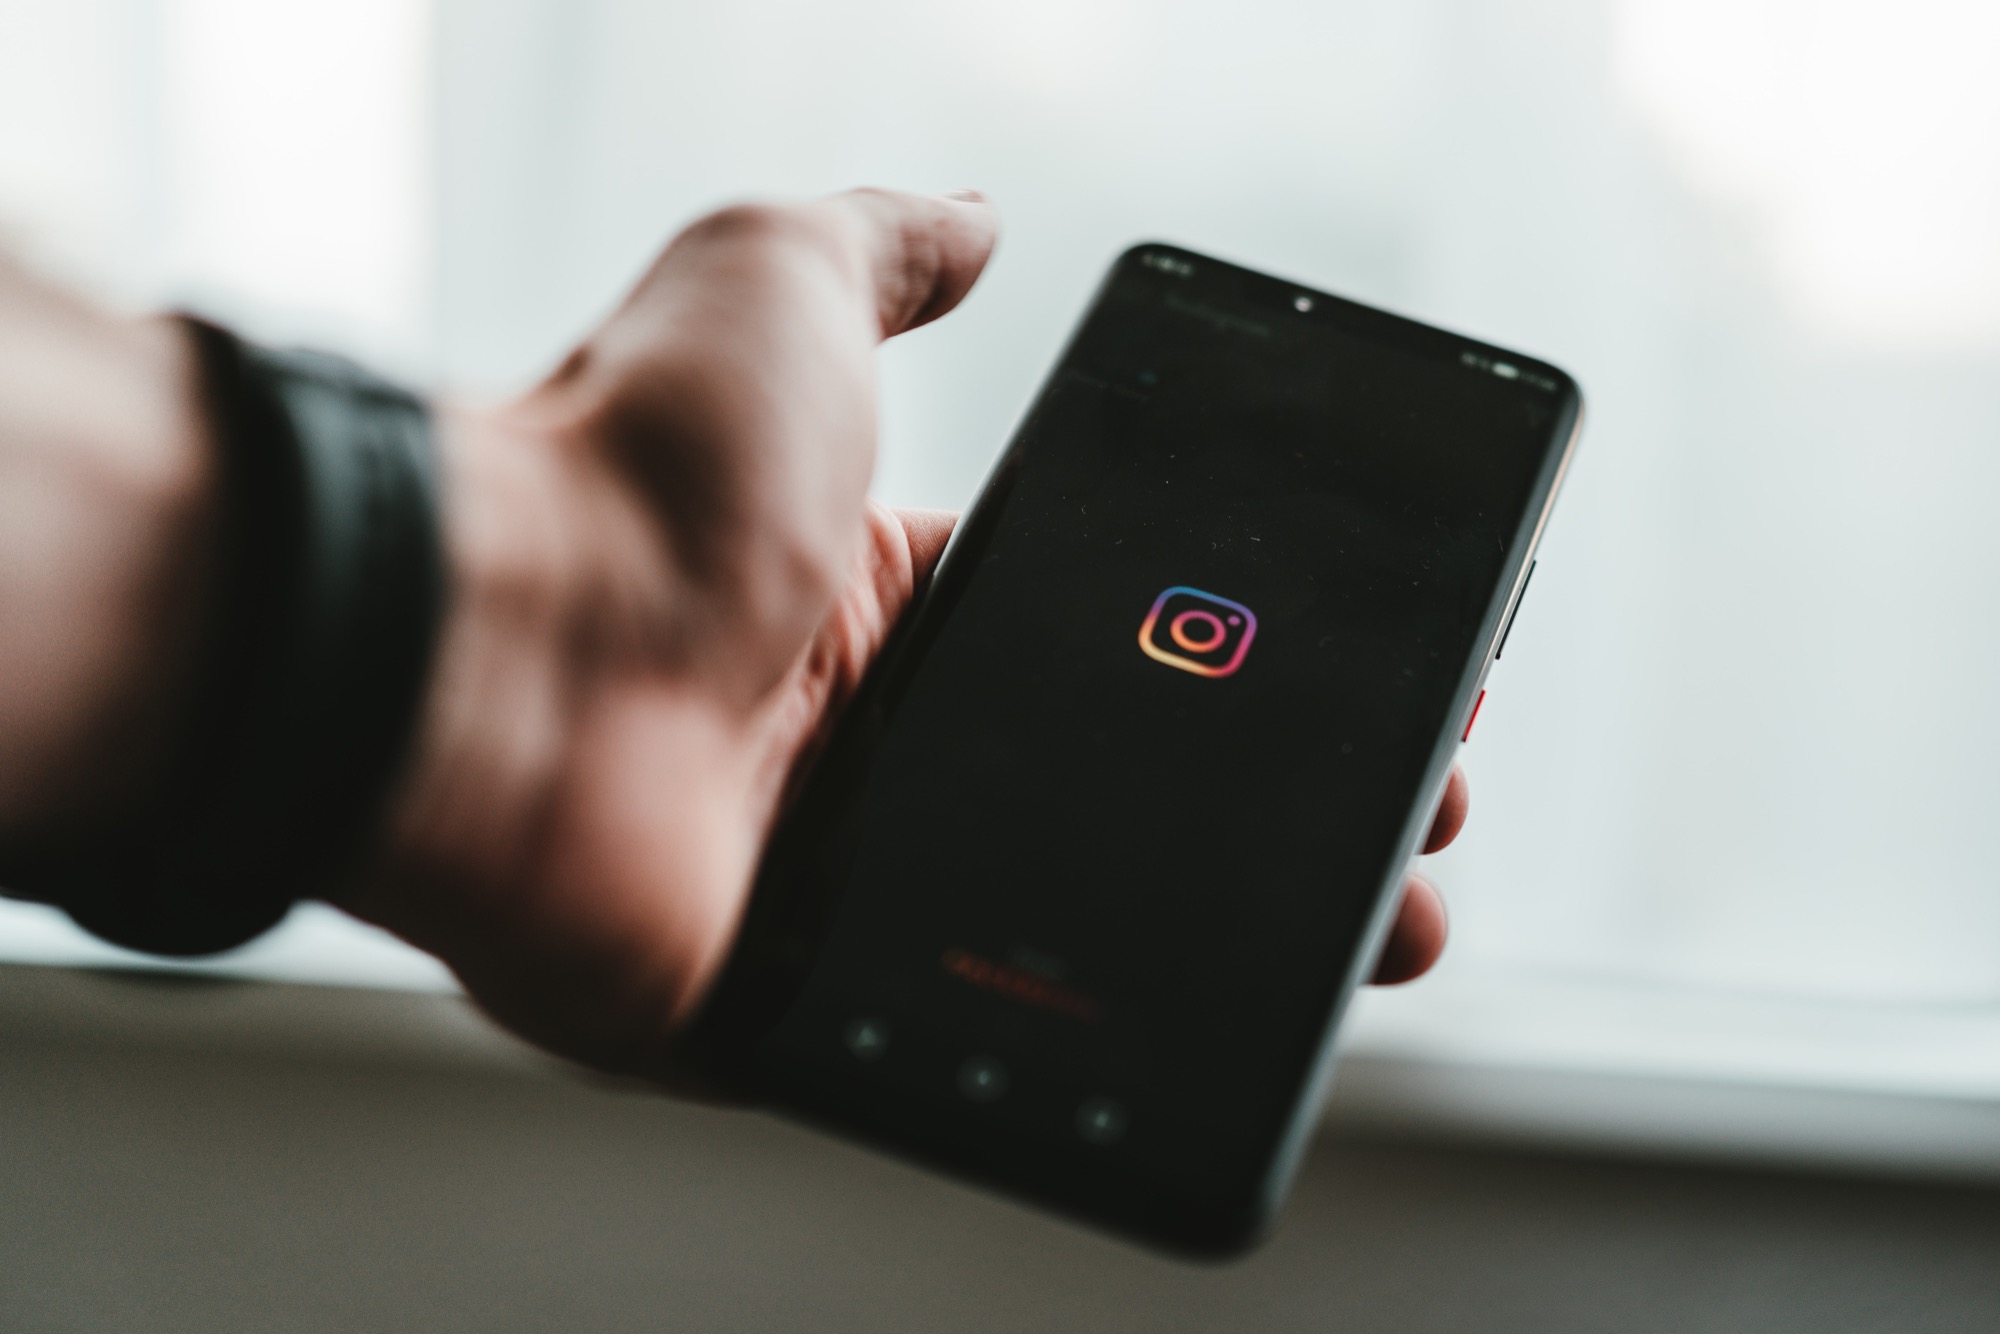 instagram ads live streams der algorithmus REBELKO AACHEN AGENTUR MARKETING BRANDING SOCIAL MEDIA IMAGE UNSPLASH CC0